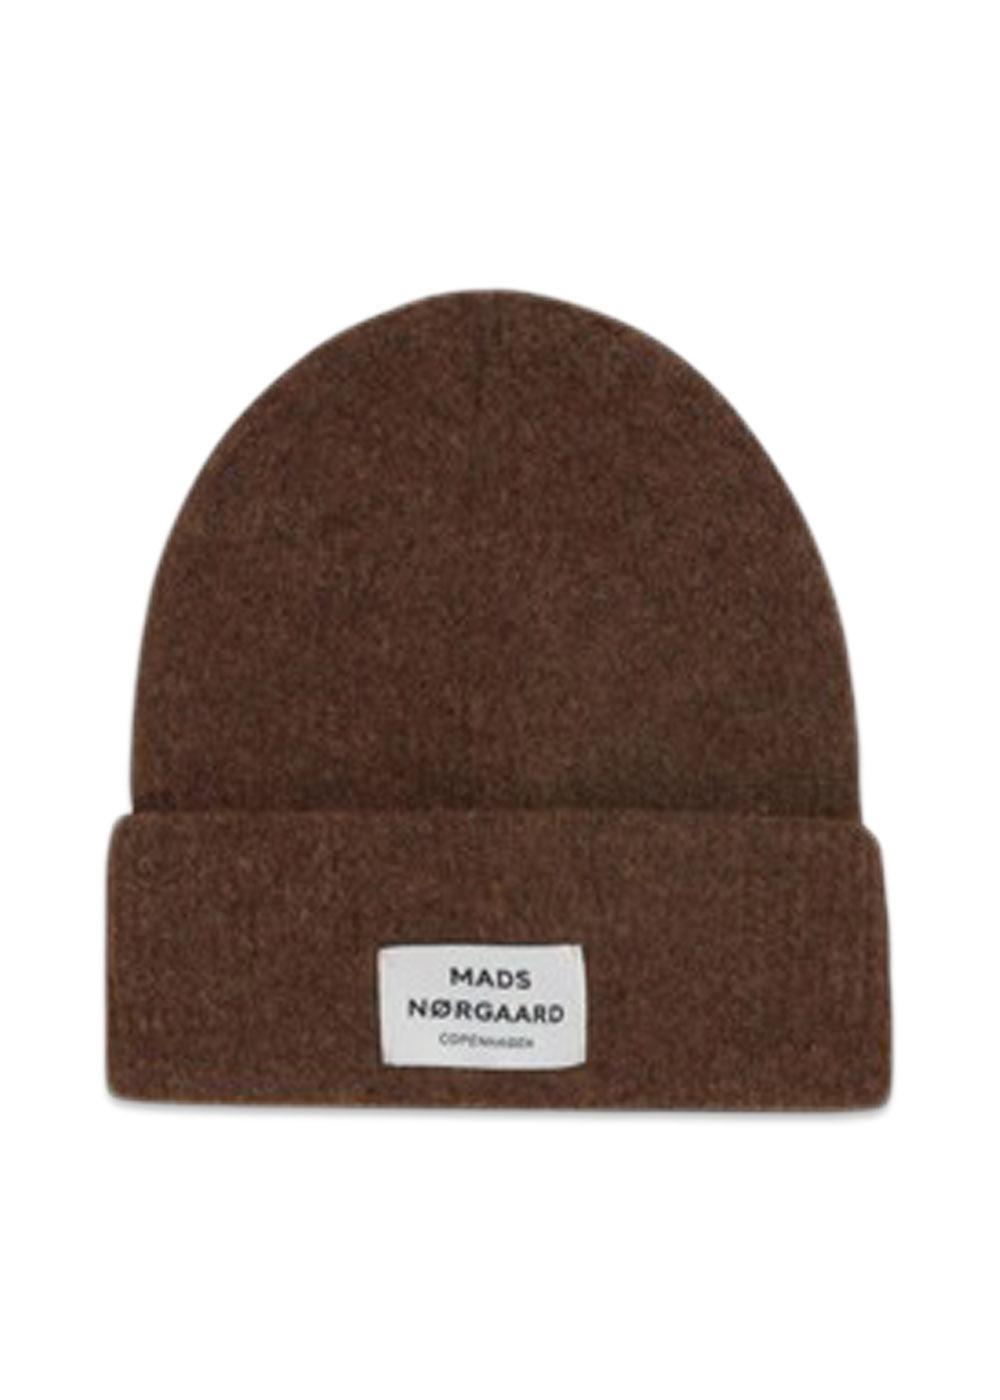 Mads Nørgaards Winter Soft Anju Hat - Beech. Køb headwear her.